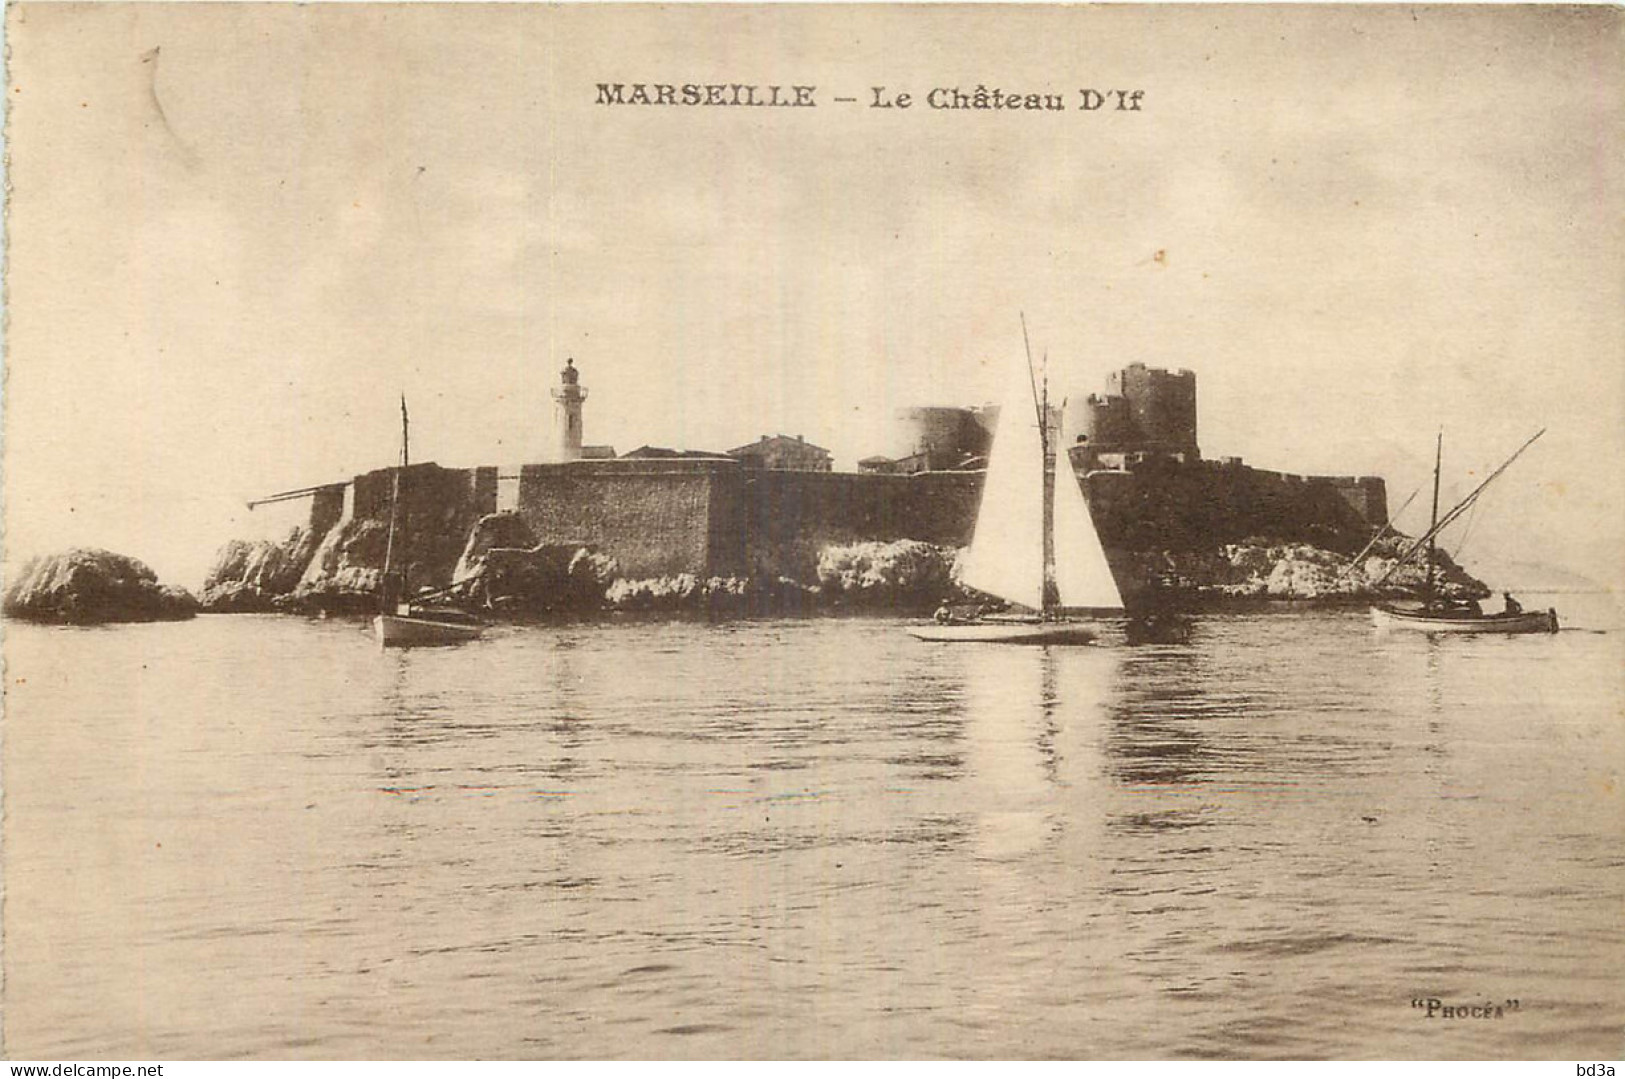 13 - MARSEILLE - LE CHATEAU D'IF - Château D'If, Frioul, Islands...